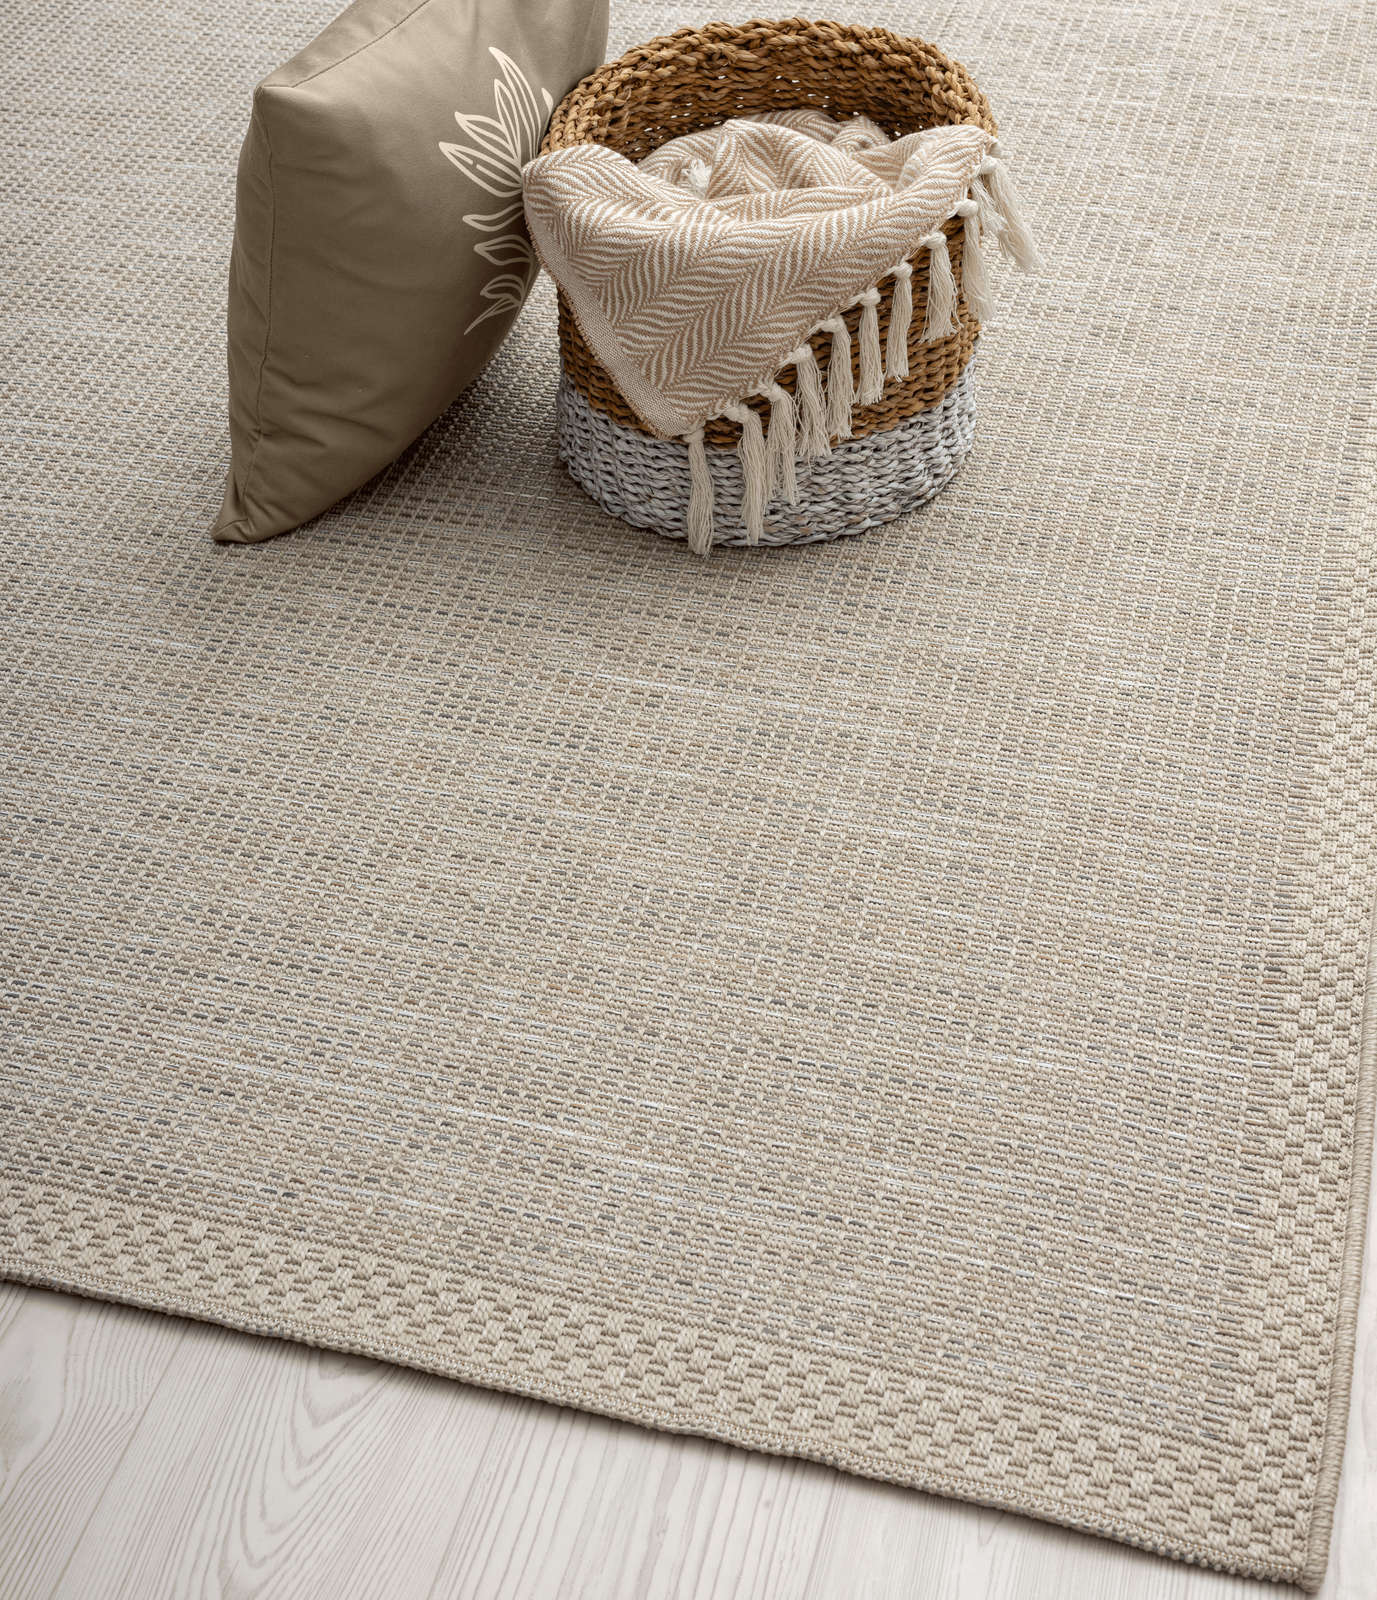             Flachgewebe Outdoor Teppich in Greige – 160 x 120 cm
        